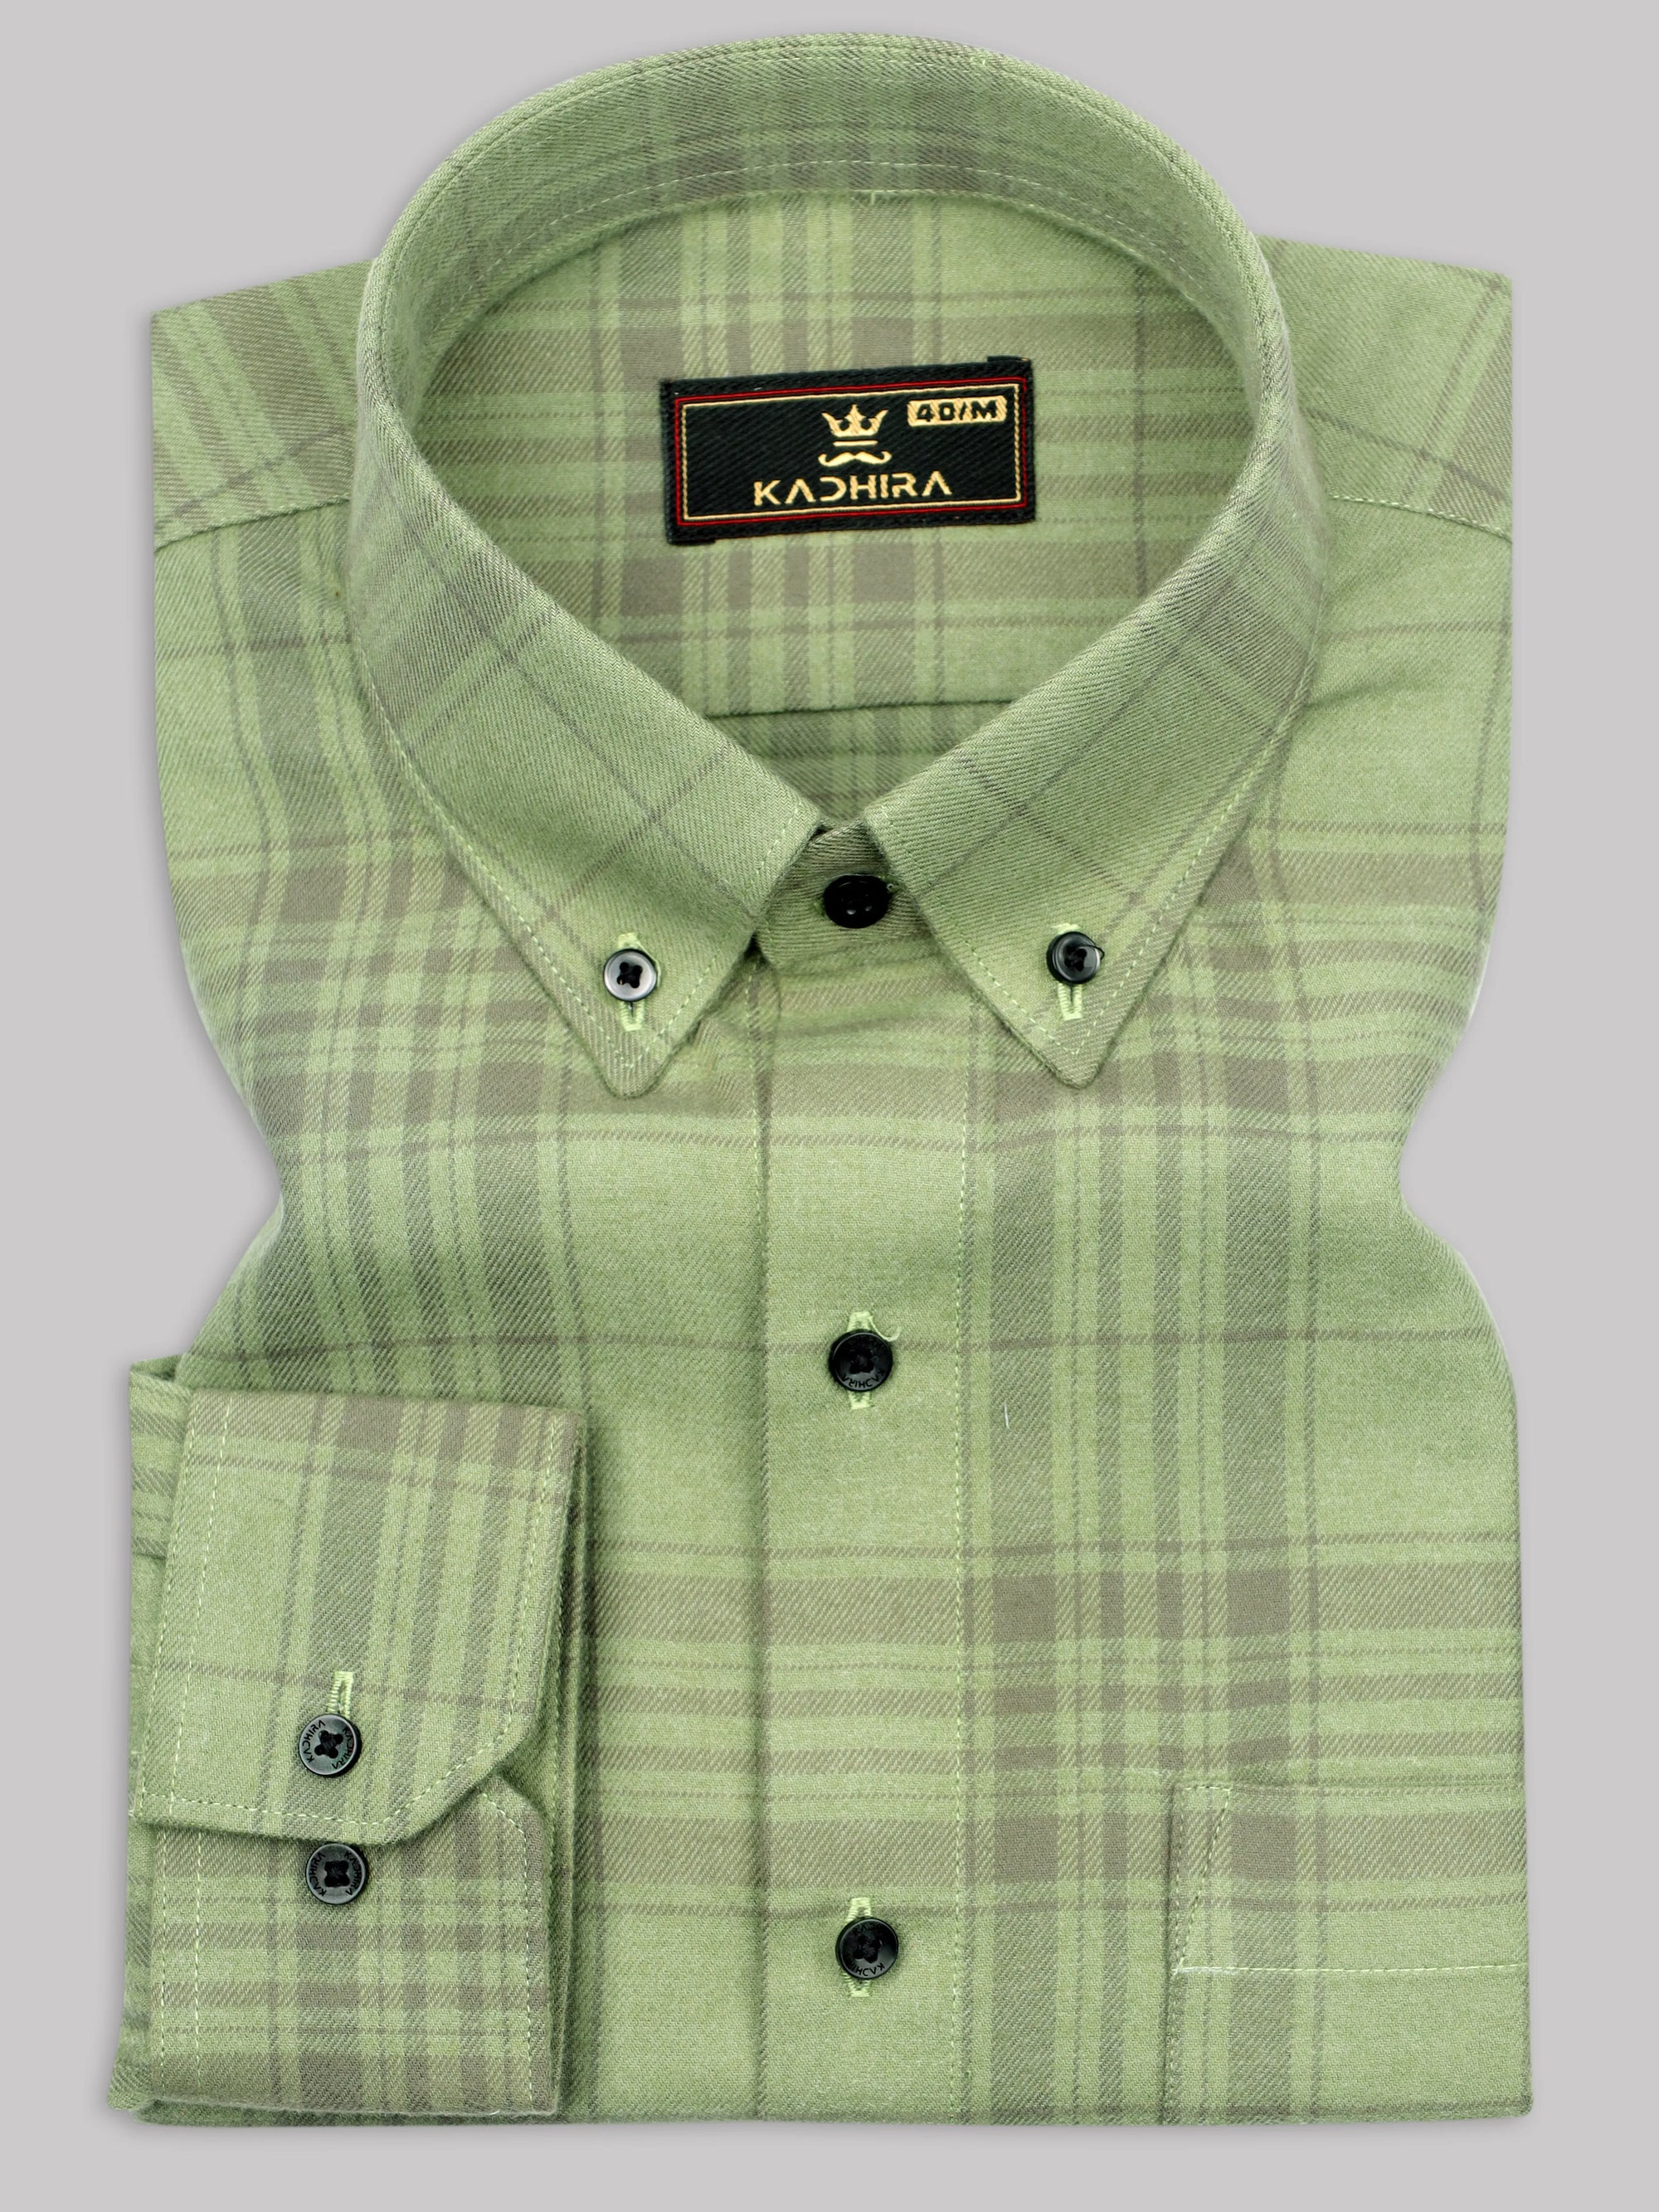 Green With Grey Tartan checks Premium Cotton Shirt